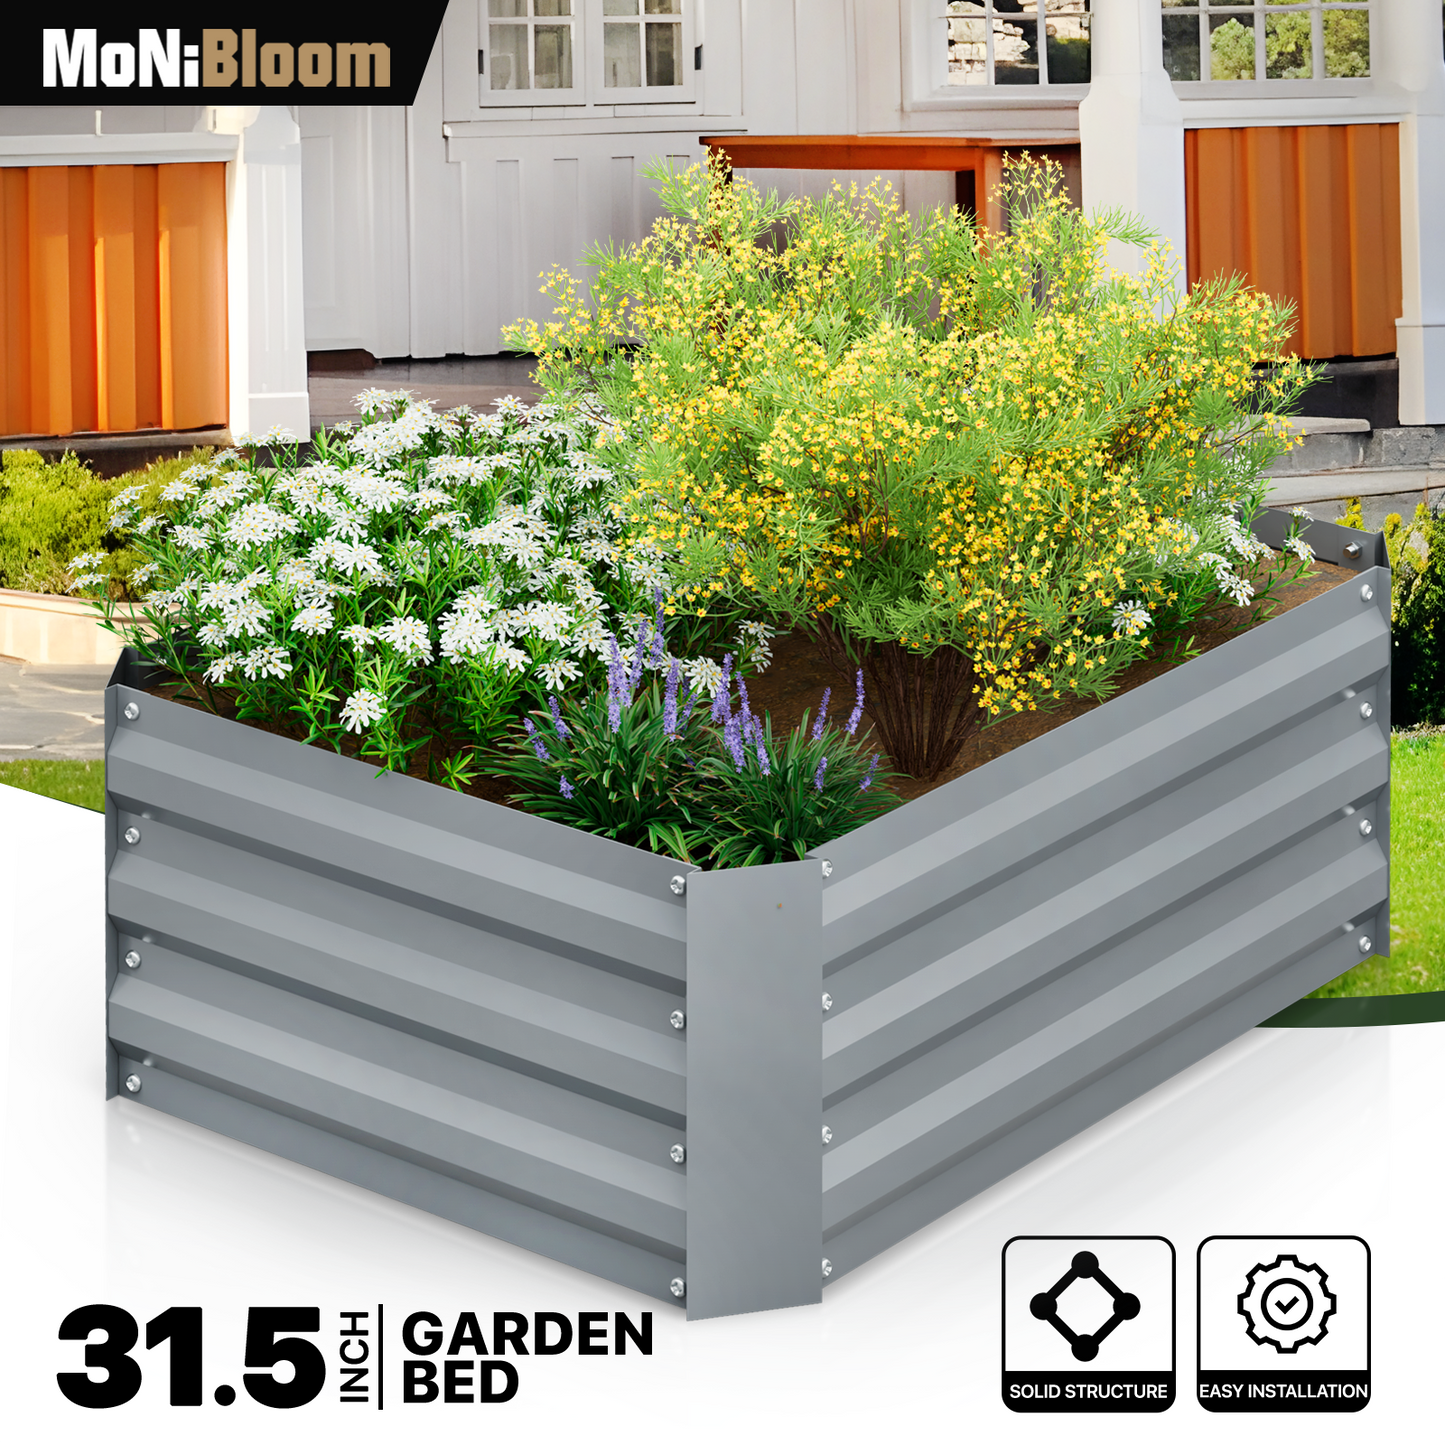 31.5"x24"x12" Patio Metal Raised Garden Bed Kit Vegetable Flower Planter Box